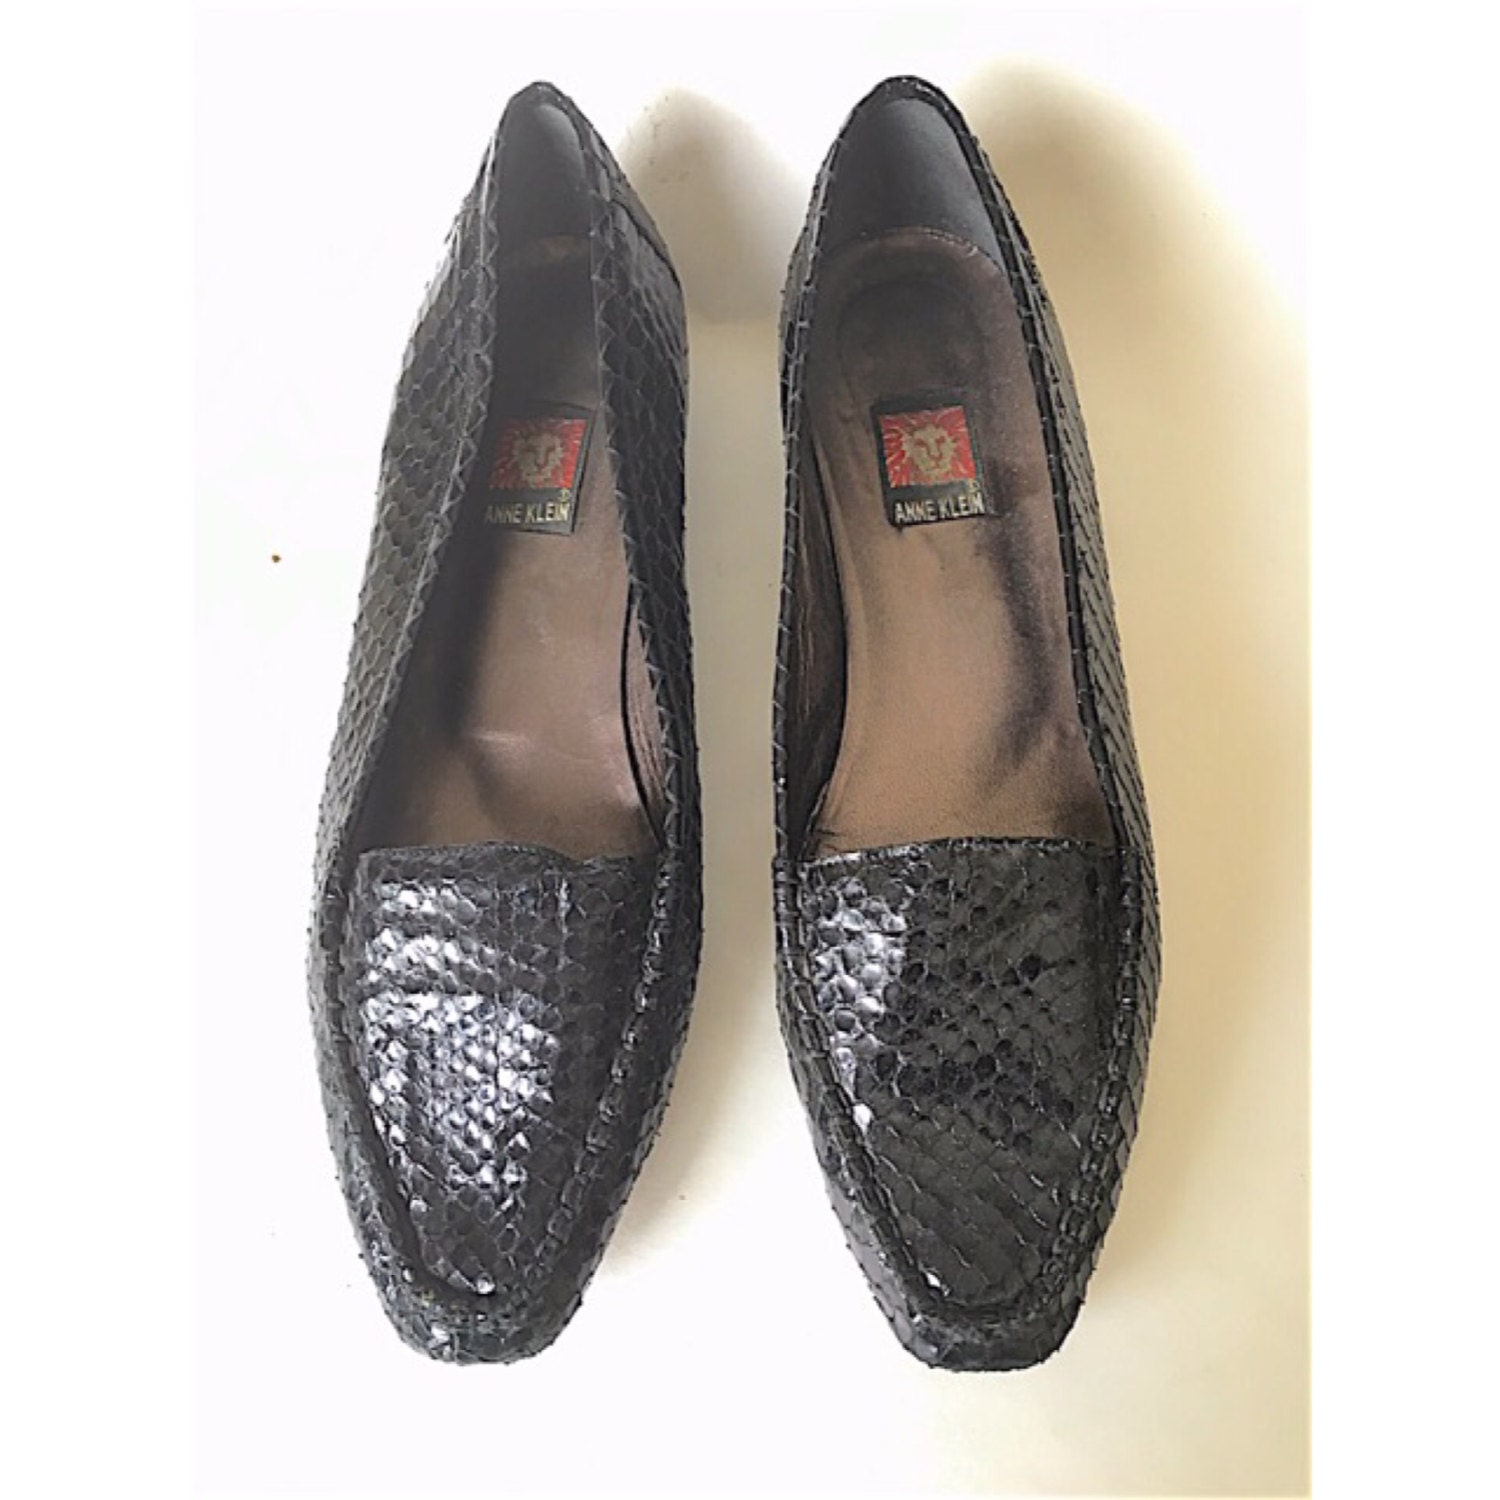 Anne Klein Flats black snake skin scales shiny leather vintage